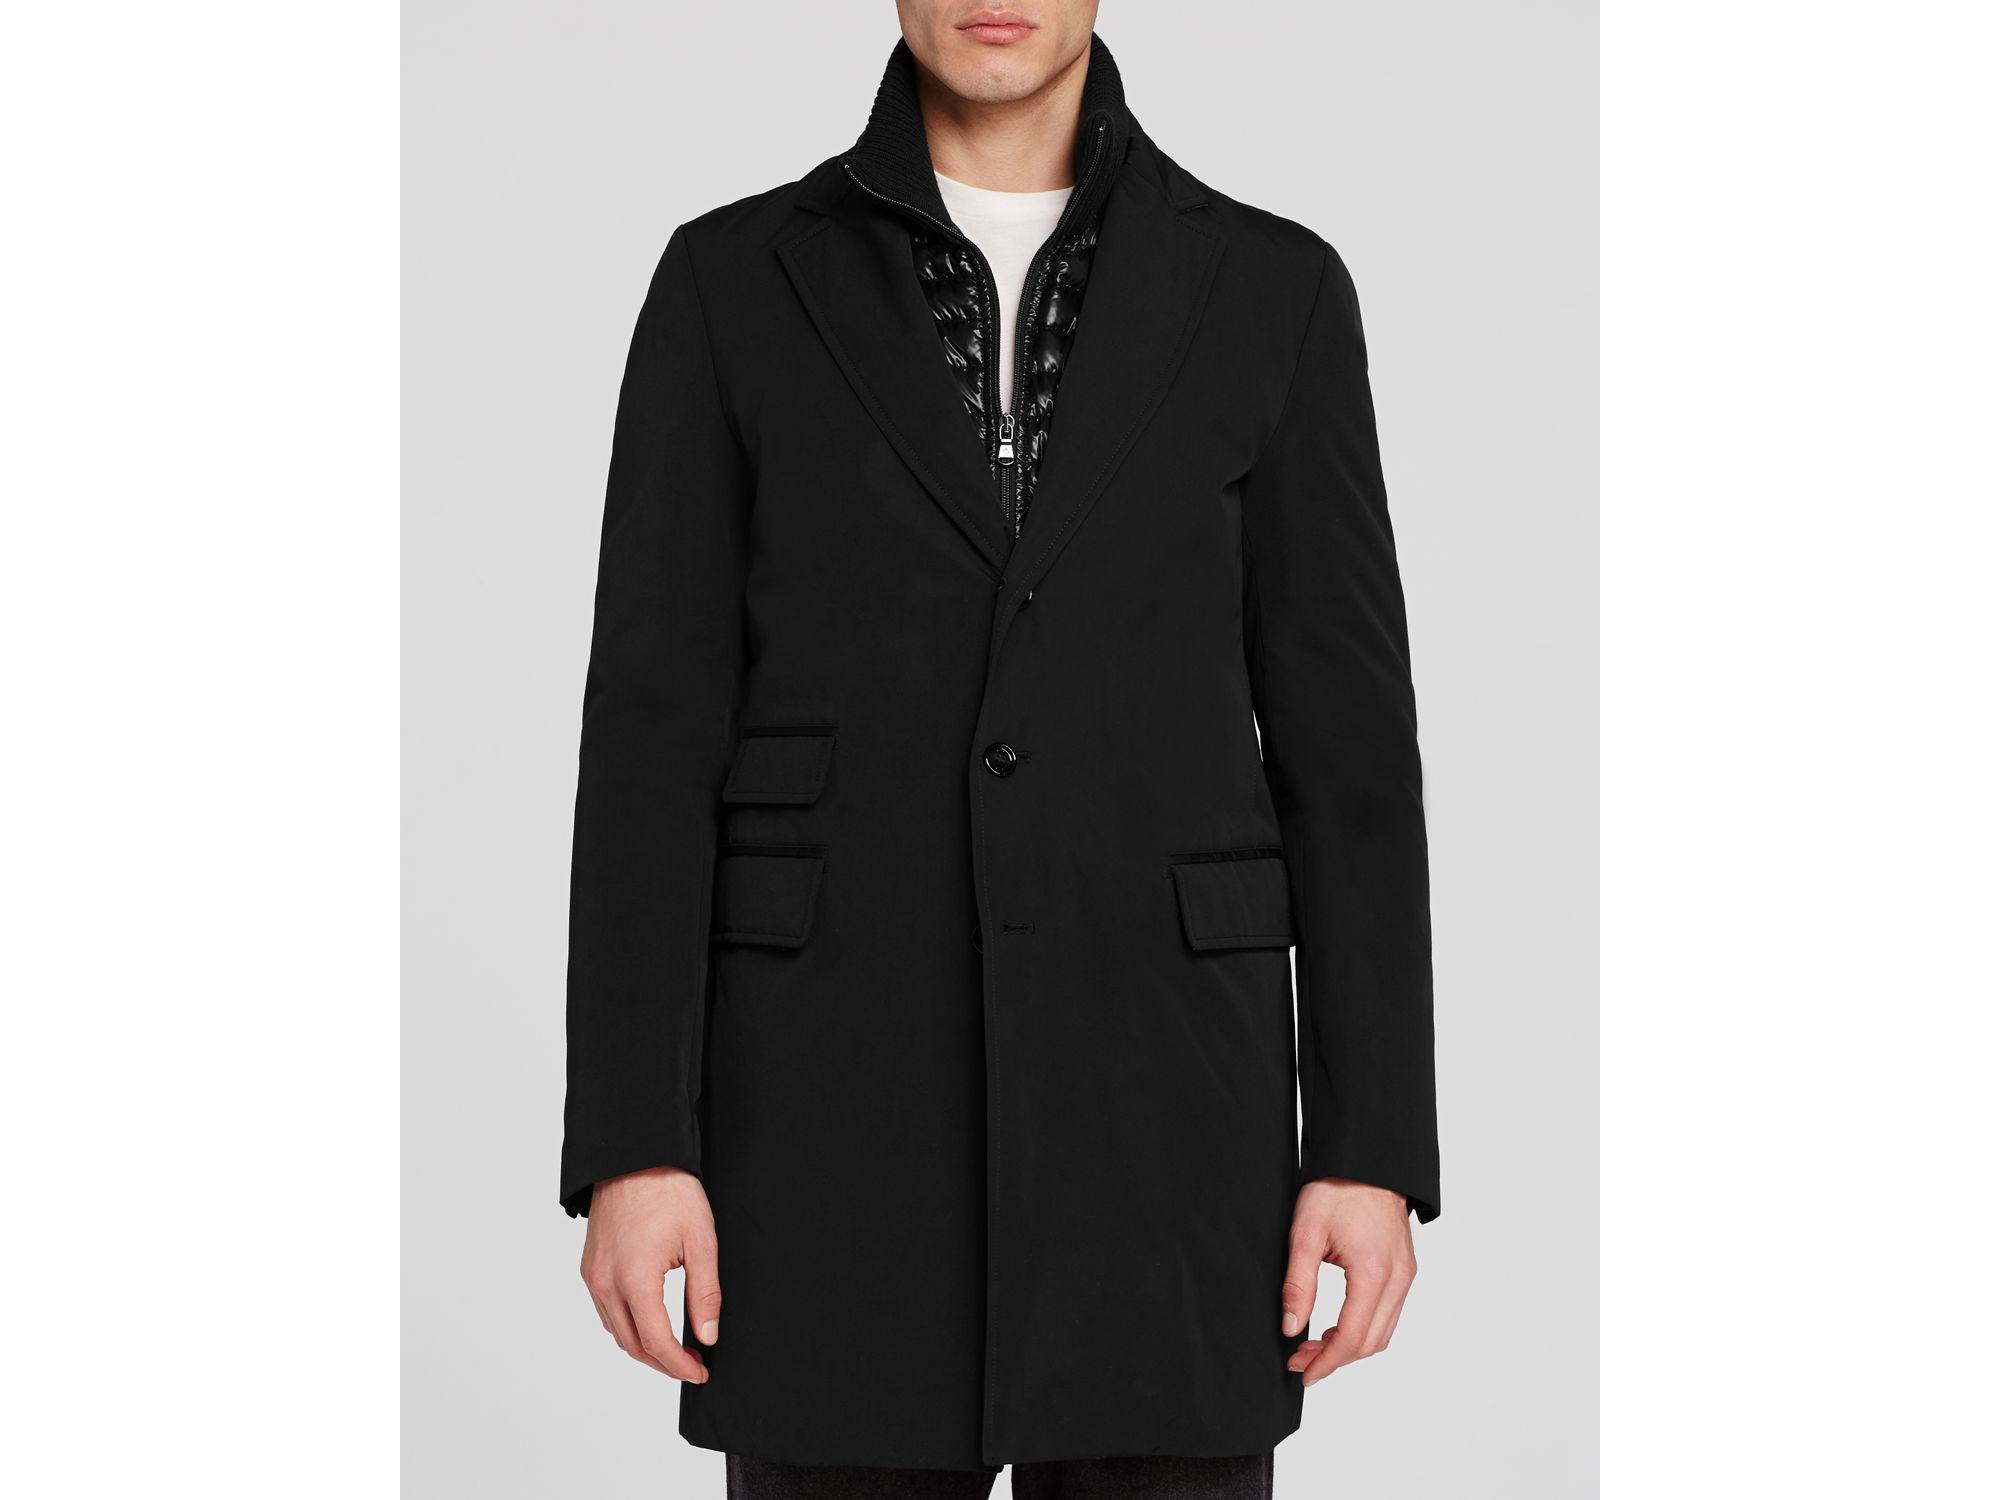 Moncler Cotton Lesparre Coat in Black for Men - Lyst